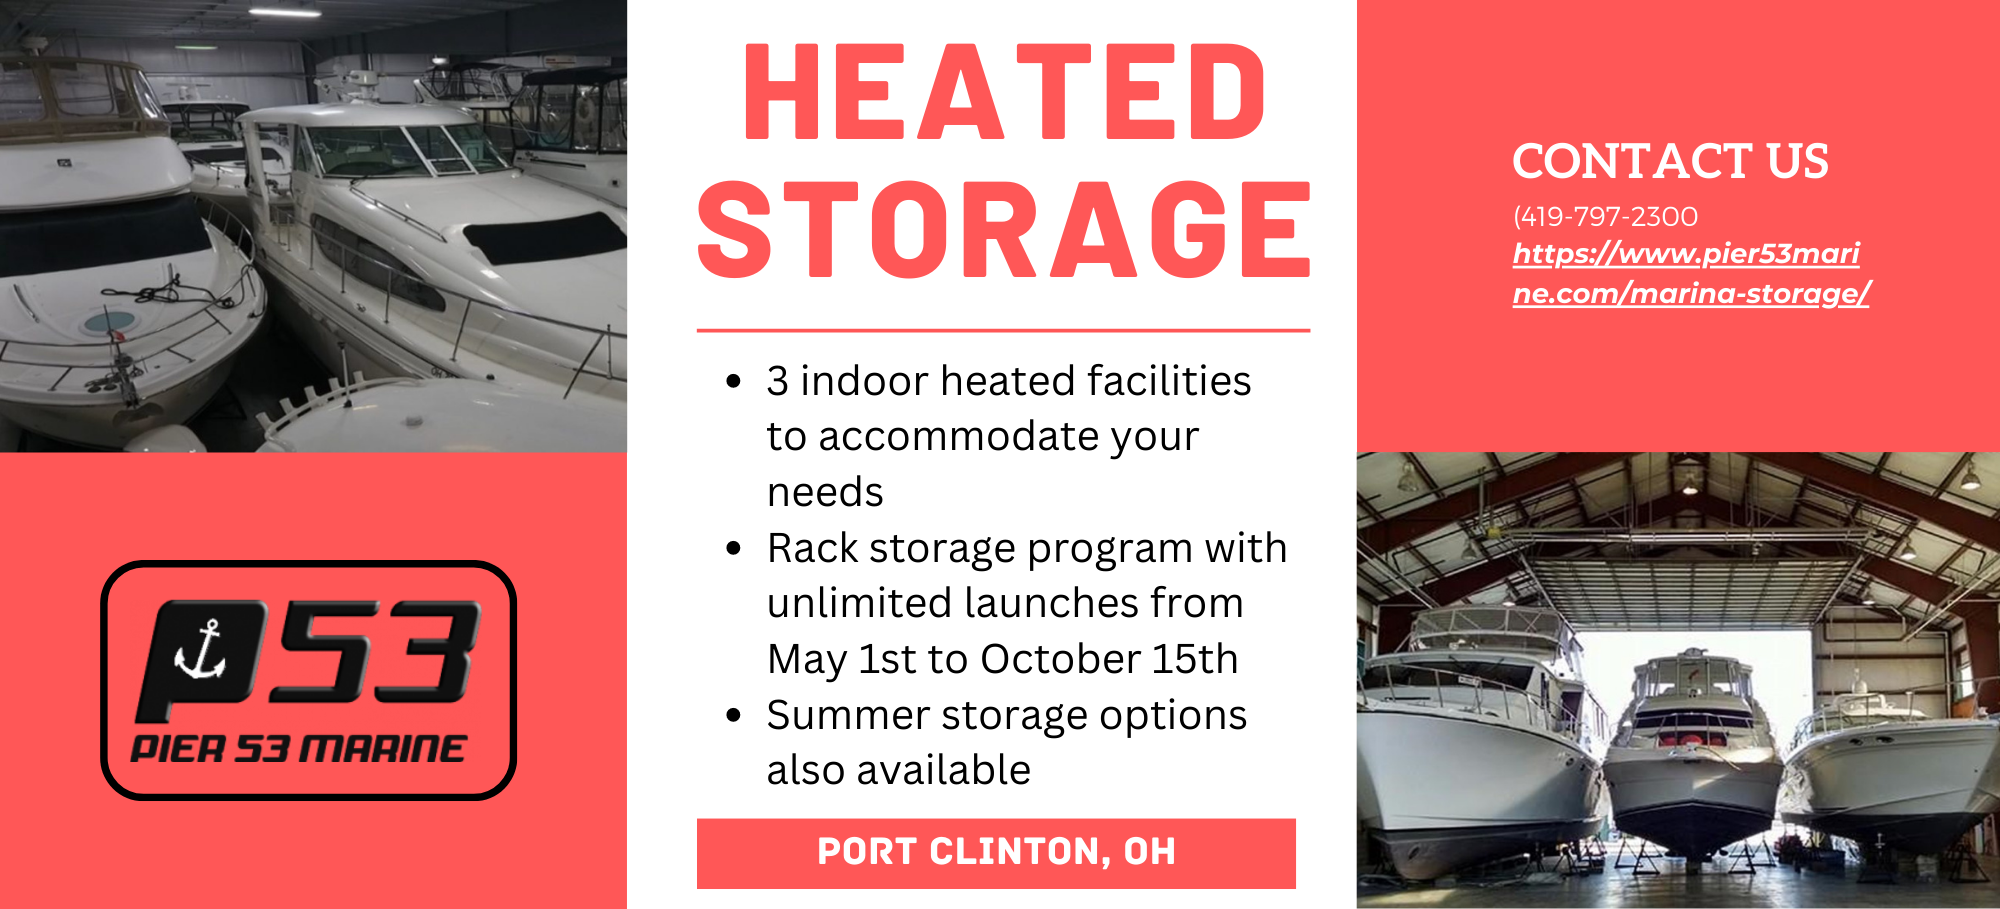 Heated Storage